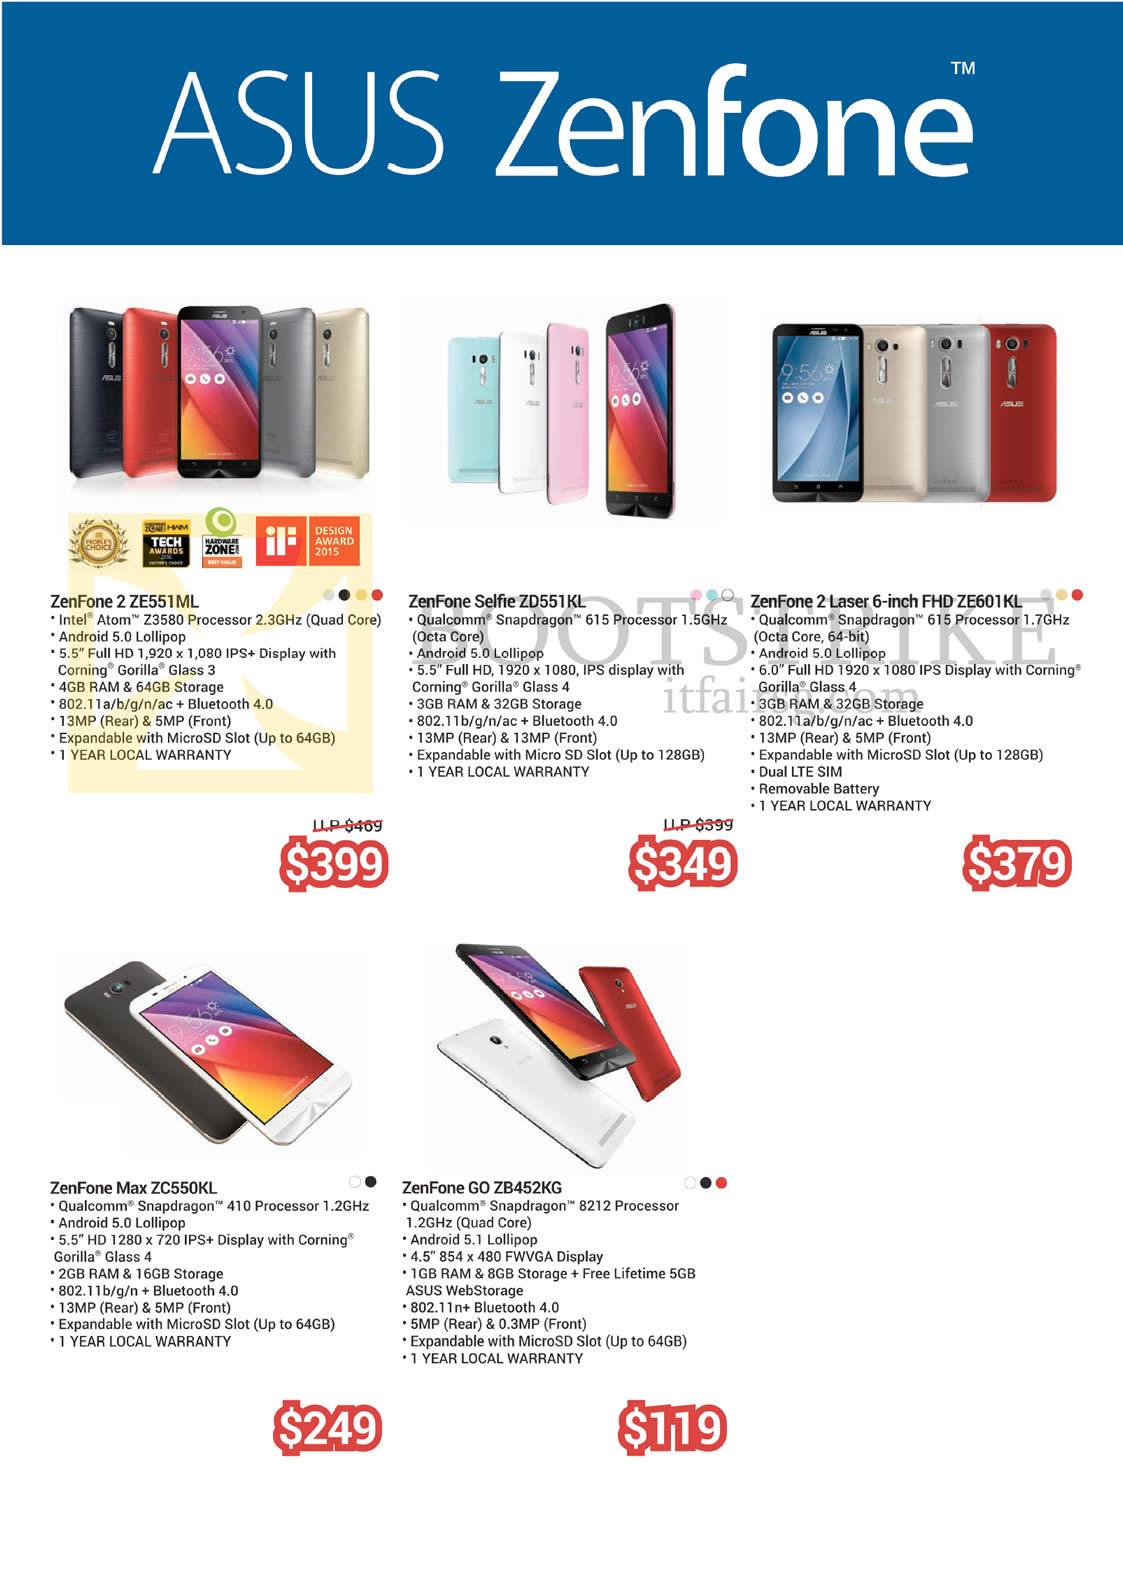 PC SHOW 2016 price list image brochure of ASUS Cybermind Mobile Phones Zenfone 2 ZE551ML, Selfie ZD551KL, 2 LAser FHD-ZE601KL, Max ZC550KL, GO ZB452KG